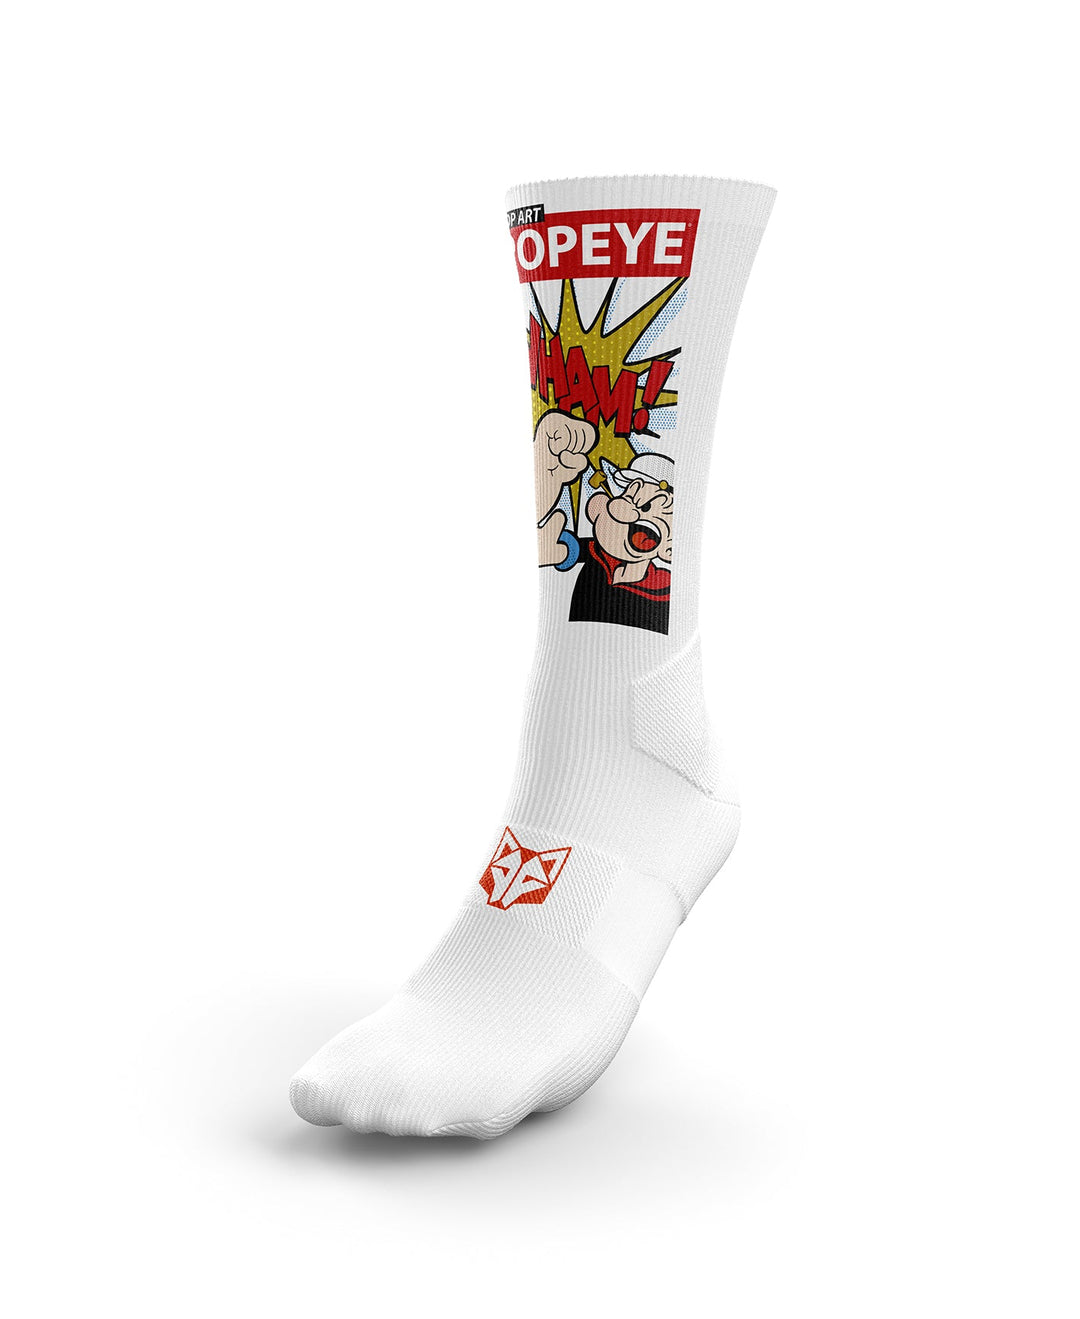 OTSO Popeye Pop Art High Cut Socks (オツソ マルチスポーツソックス ハイカット ポパイ ポップアート)